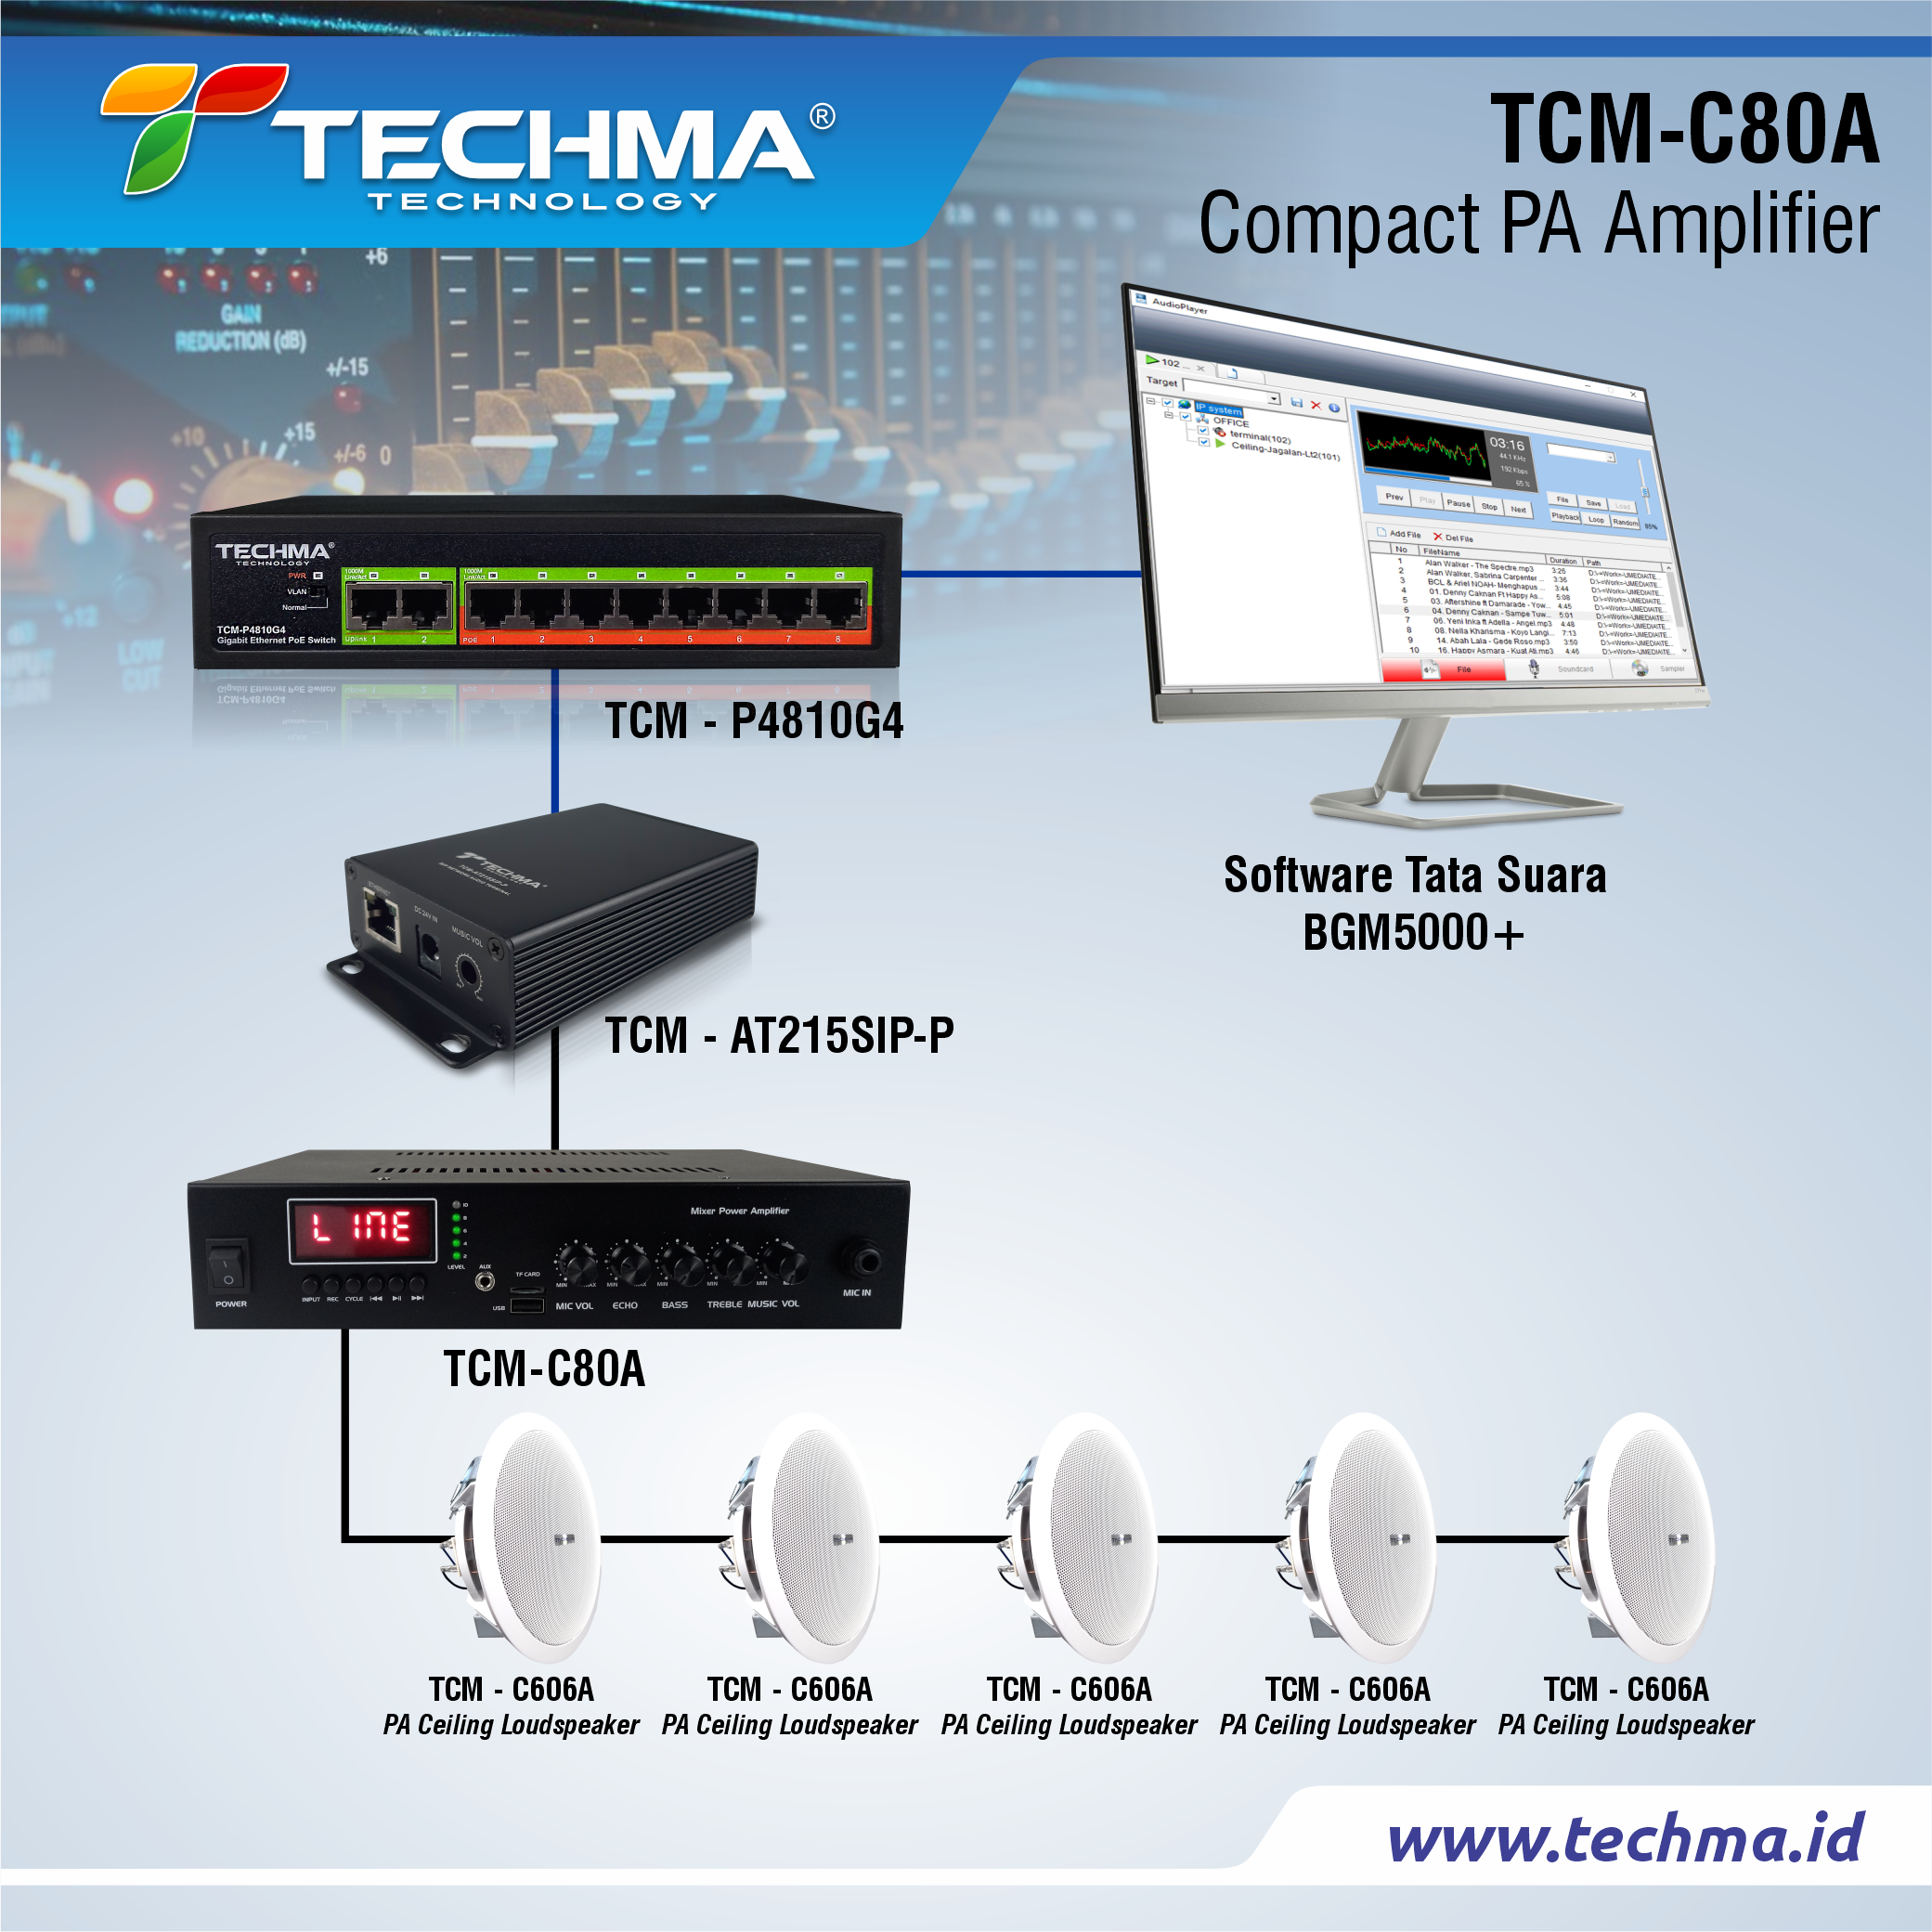 TCM-C80A WEB 3